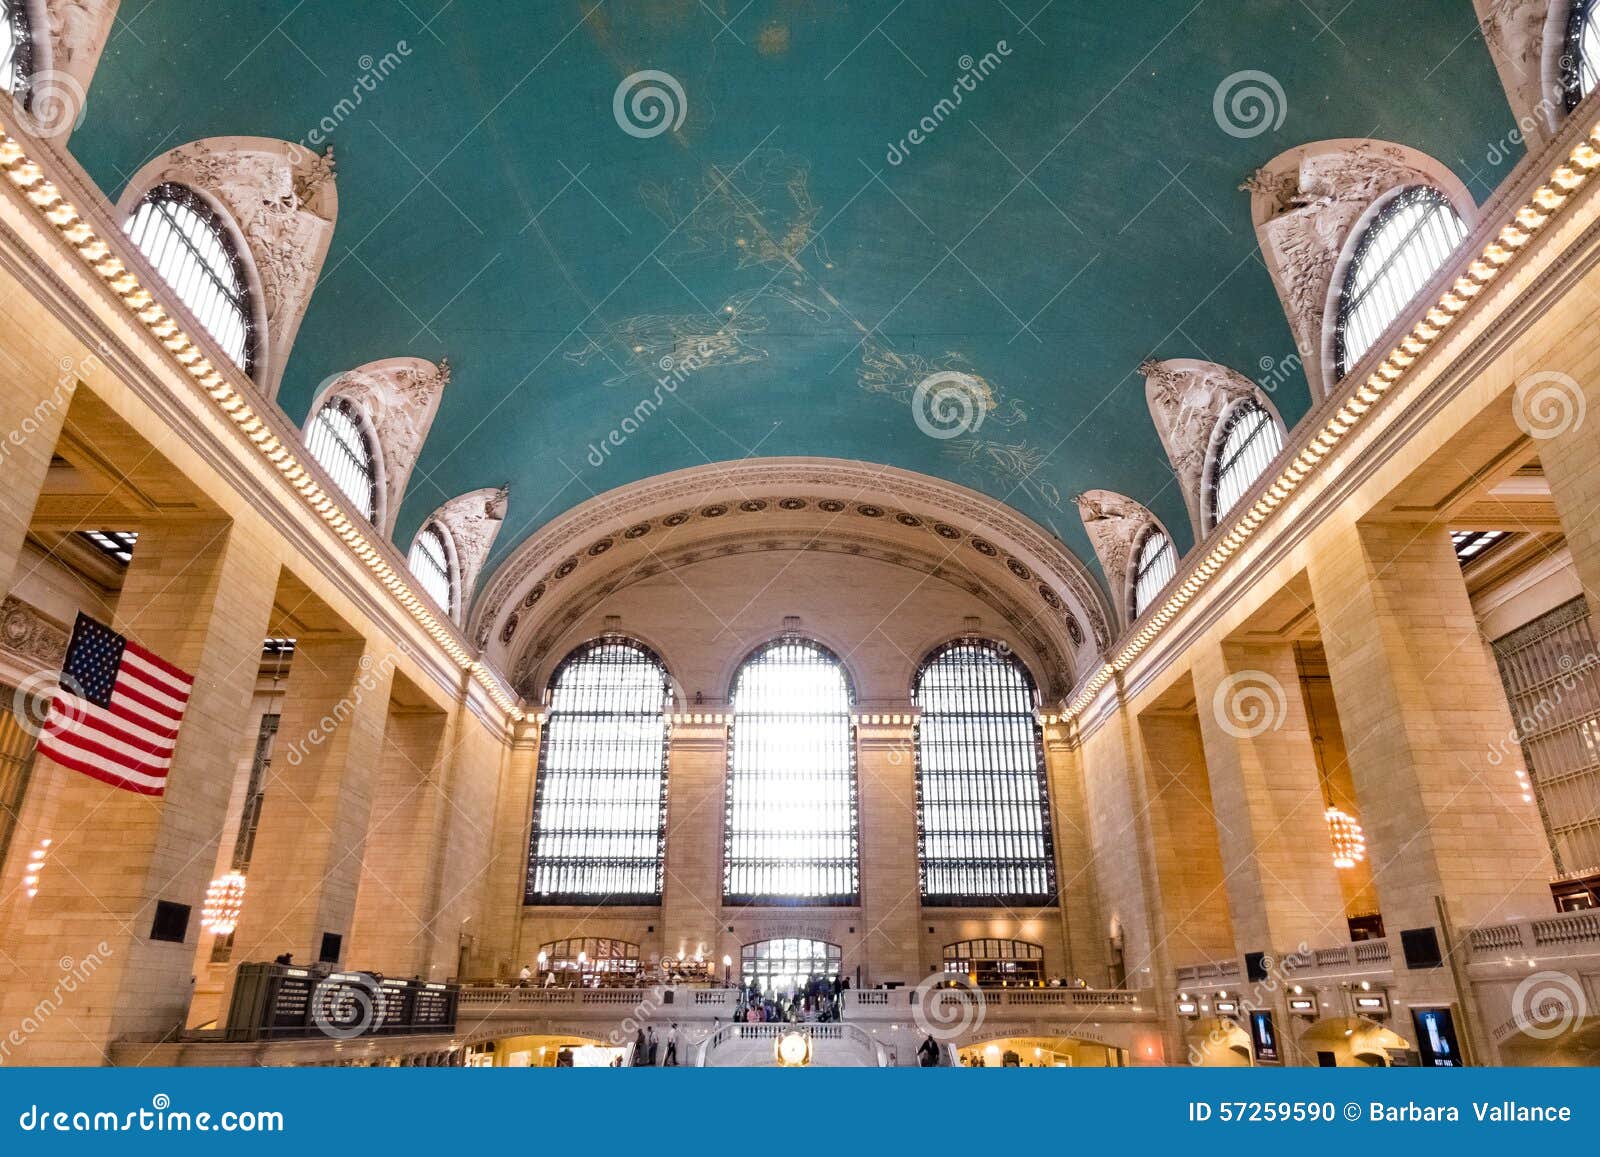 Grand Central Terminal Main Concourse Editorial Image